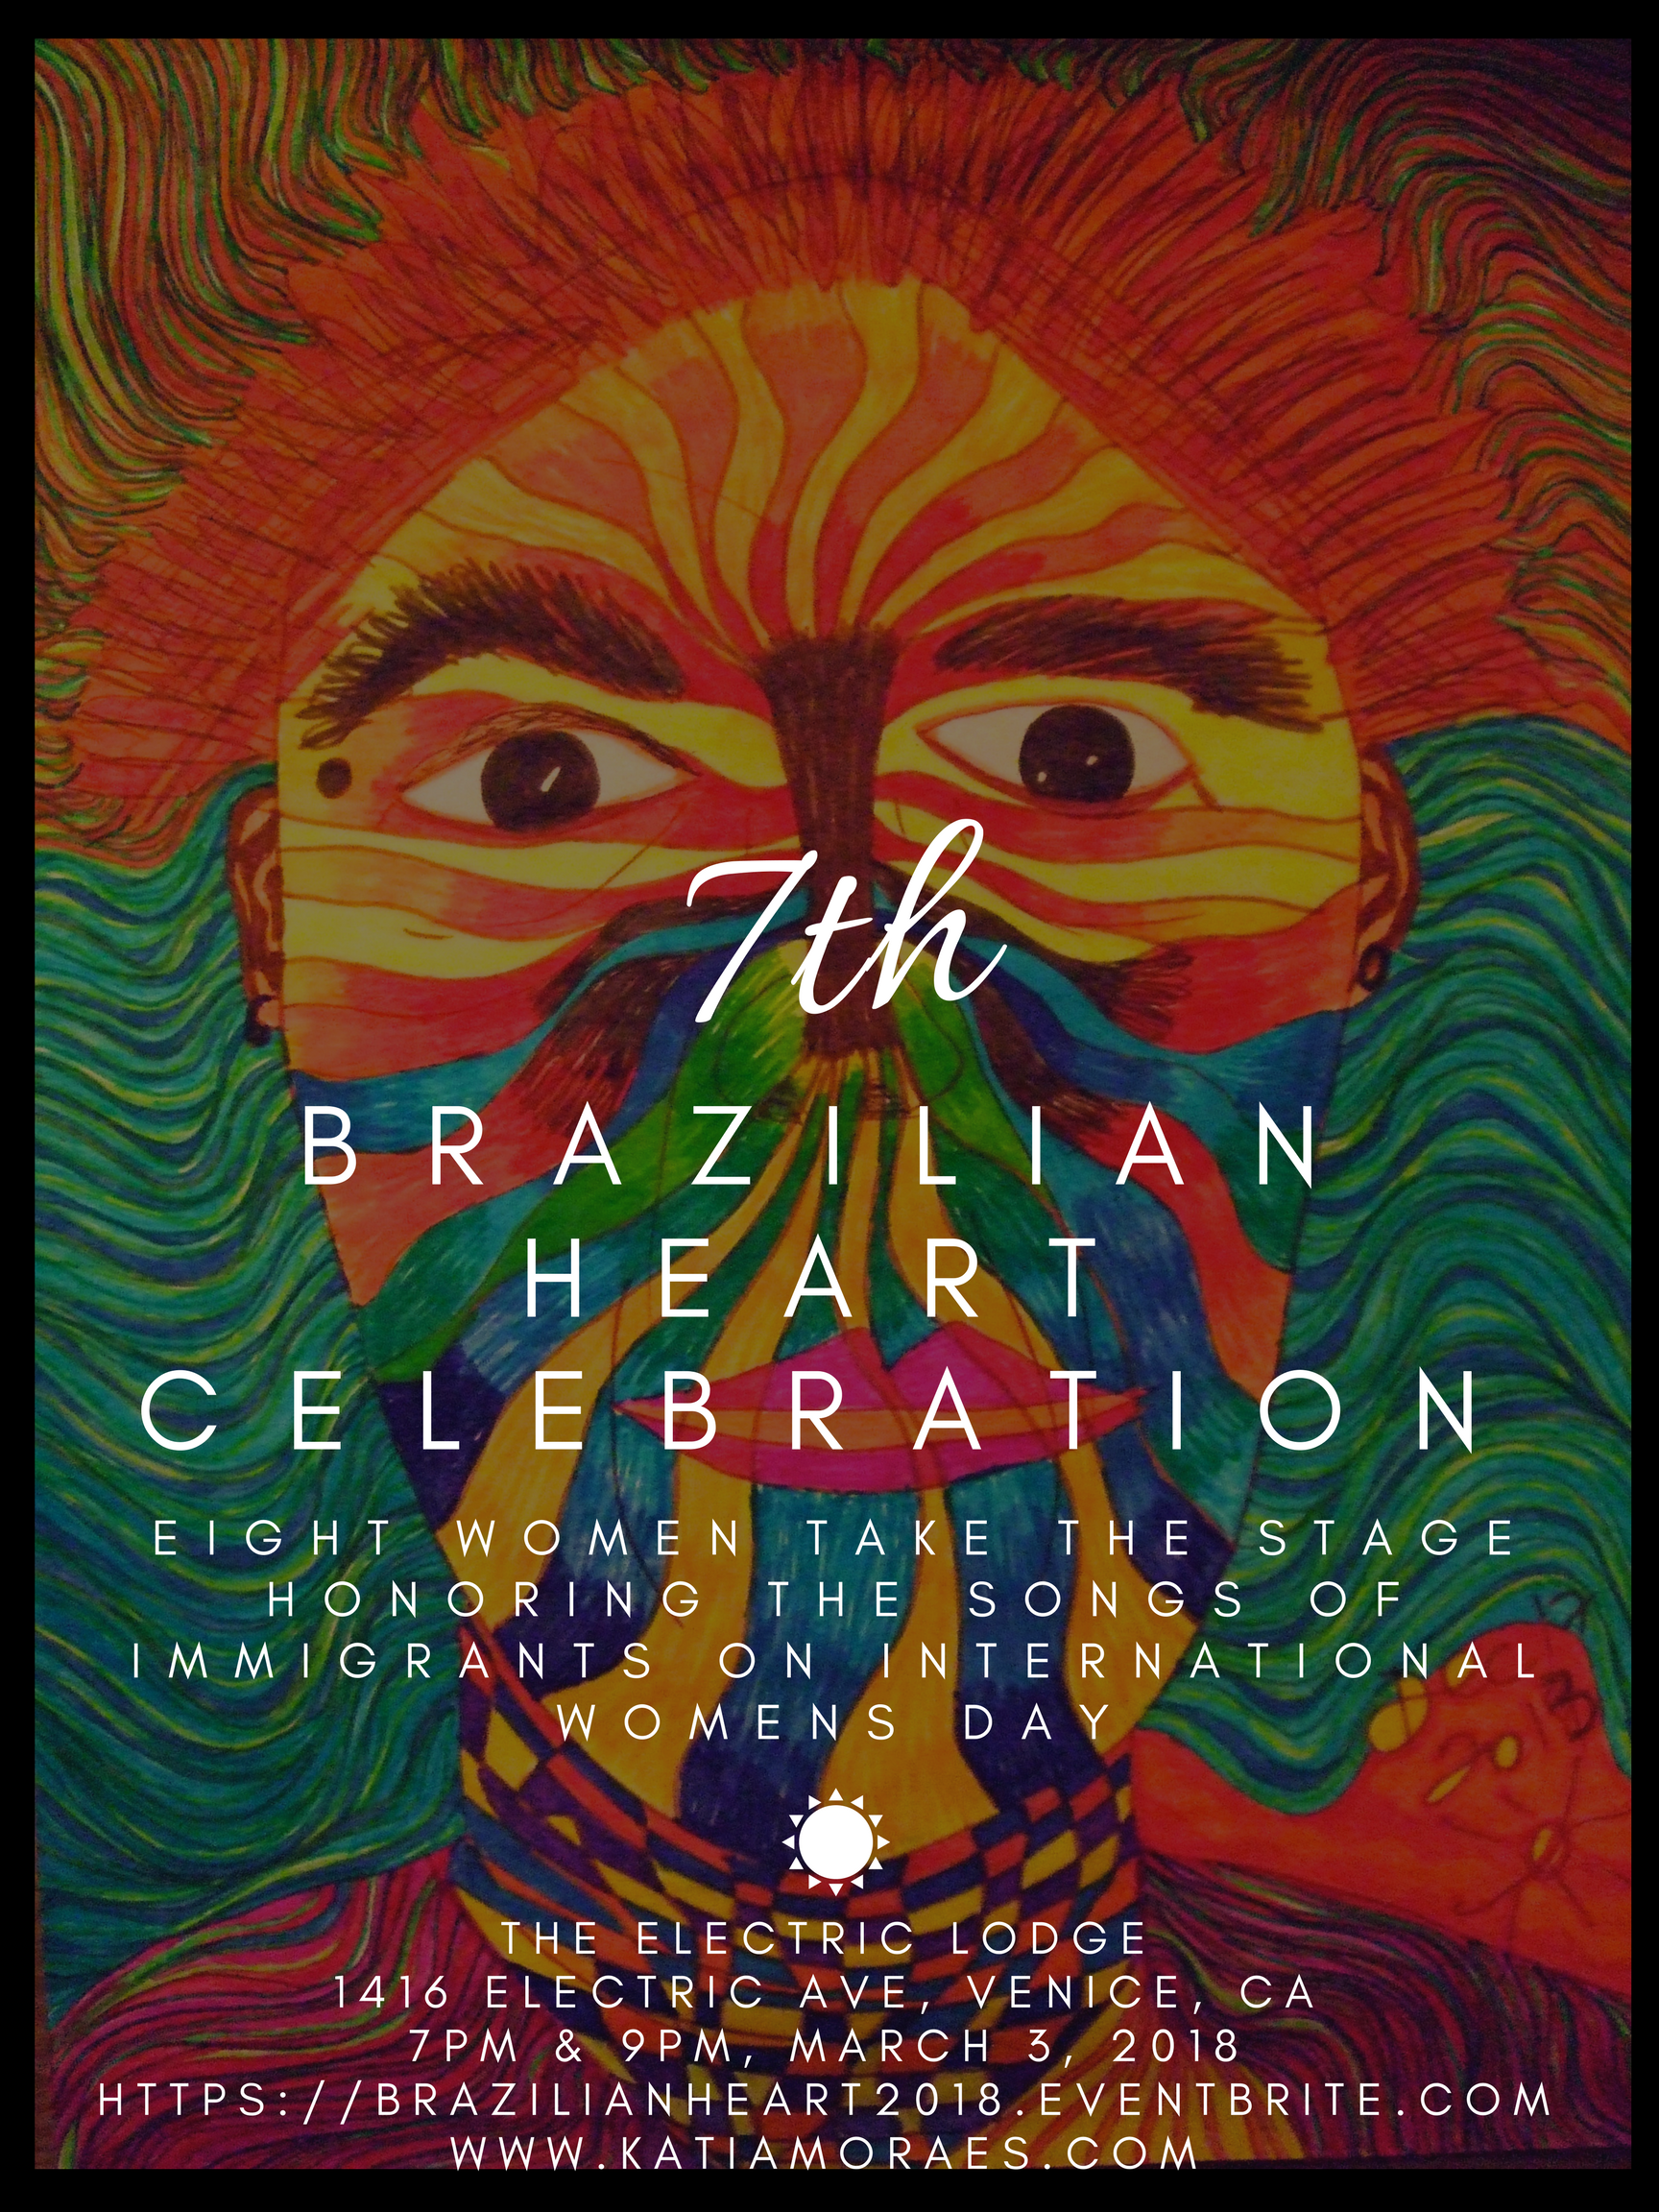 The 7th Brazilian Heart Celebration